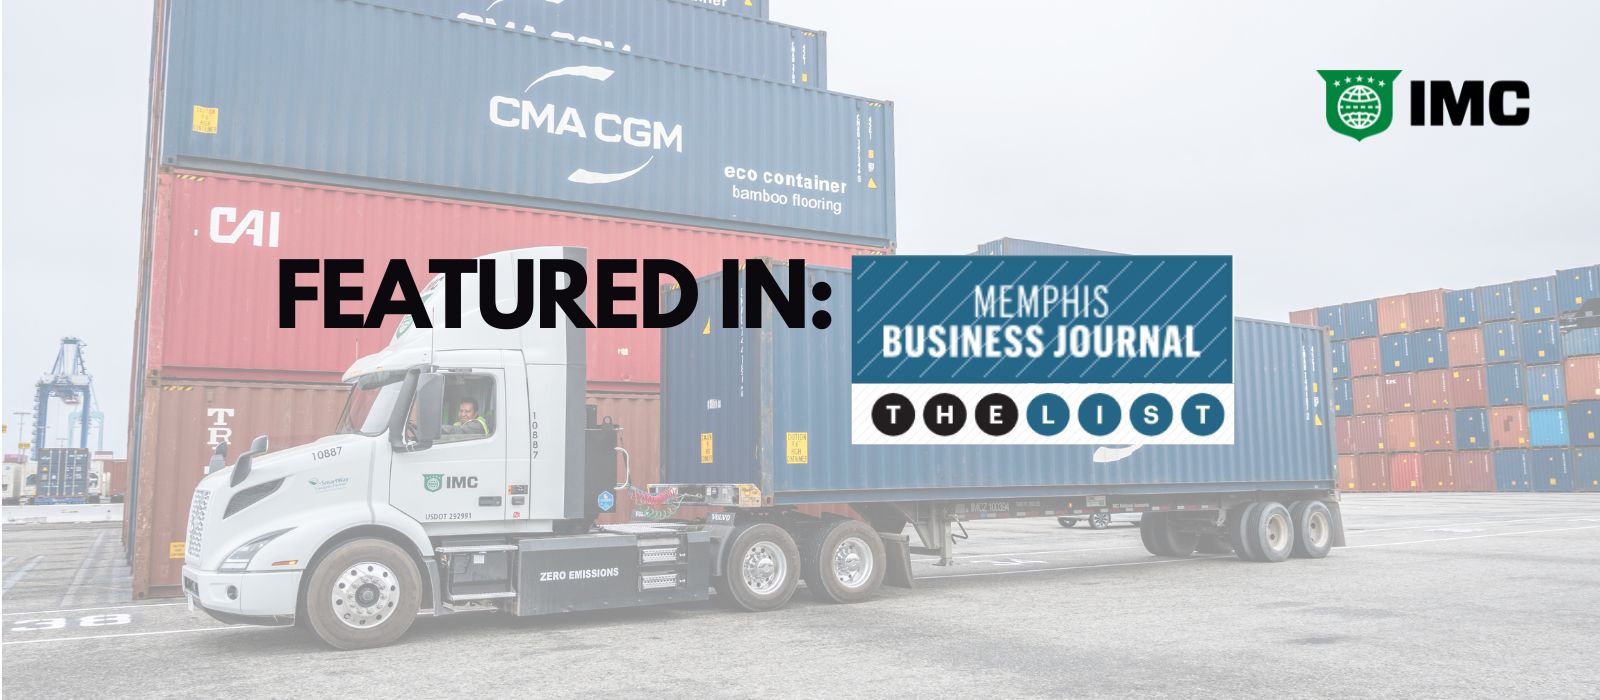 IMC Ranks on Memphis Business Journals “The List”